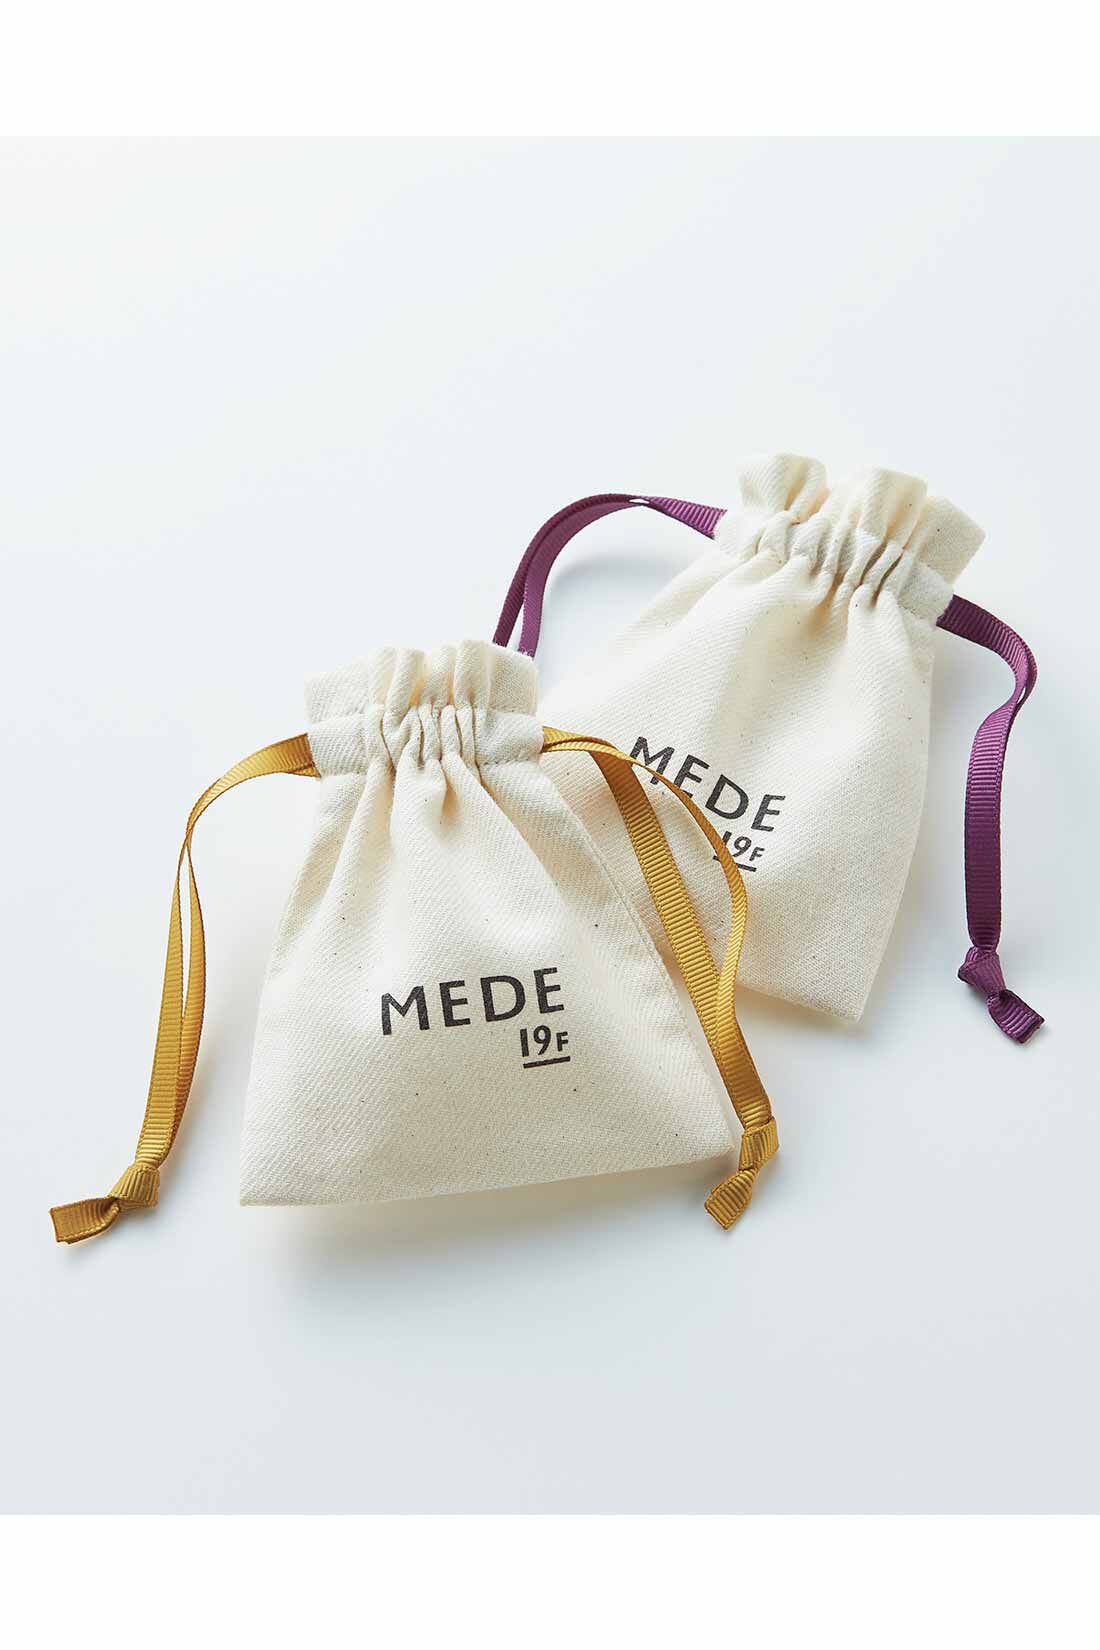 MEDE19F|YPAC for MEDE19F　フランス製陶器ボタンイヤリング type.17|MEDE19Fオリジナルきんちゃくに入れてお届けします。